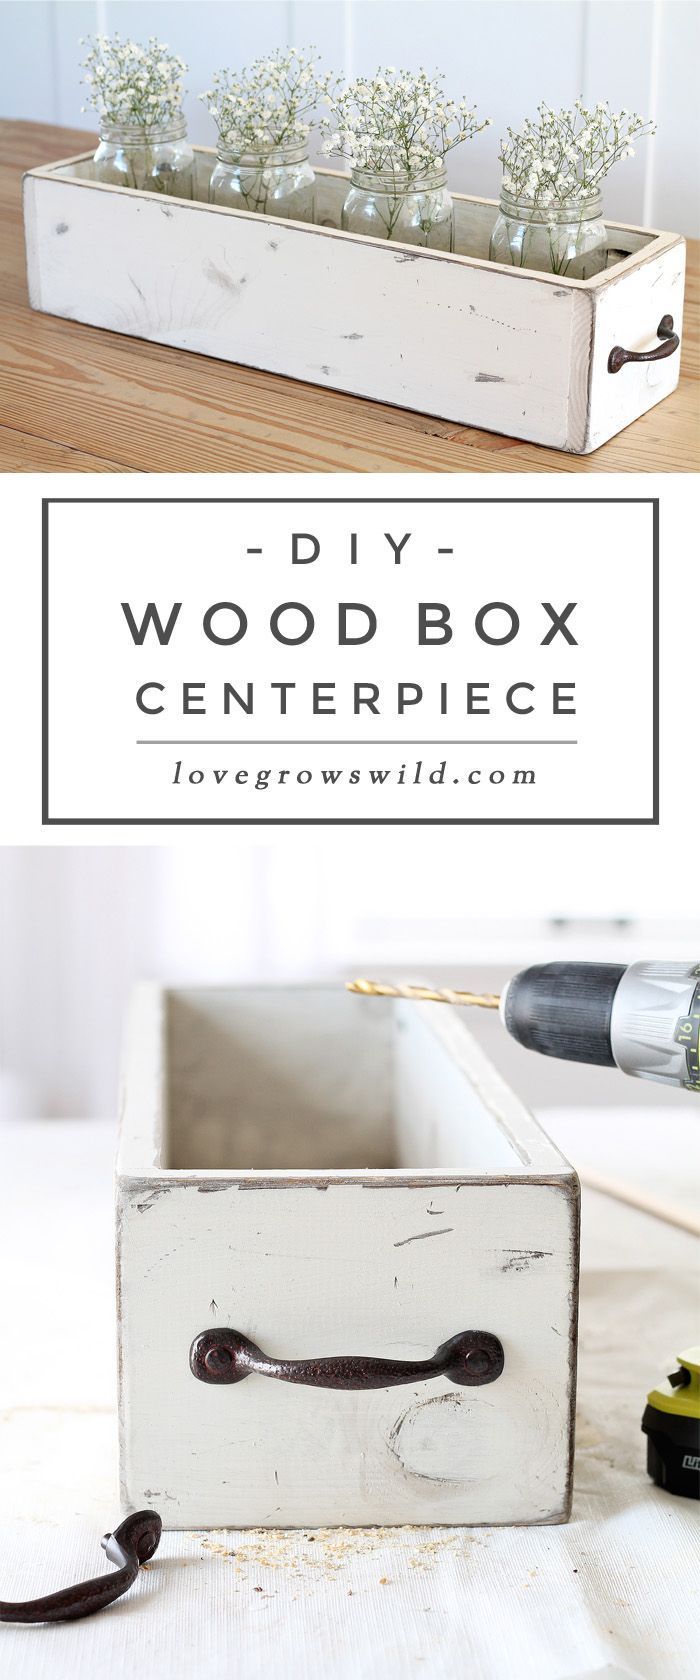 DIY Wood Box Centerpiece - Love Grows Wild - DIY Wood Box Centerpiece - Love Grows Wild -   17 beauty Box wood ideas